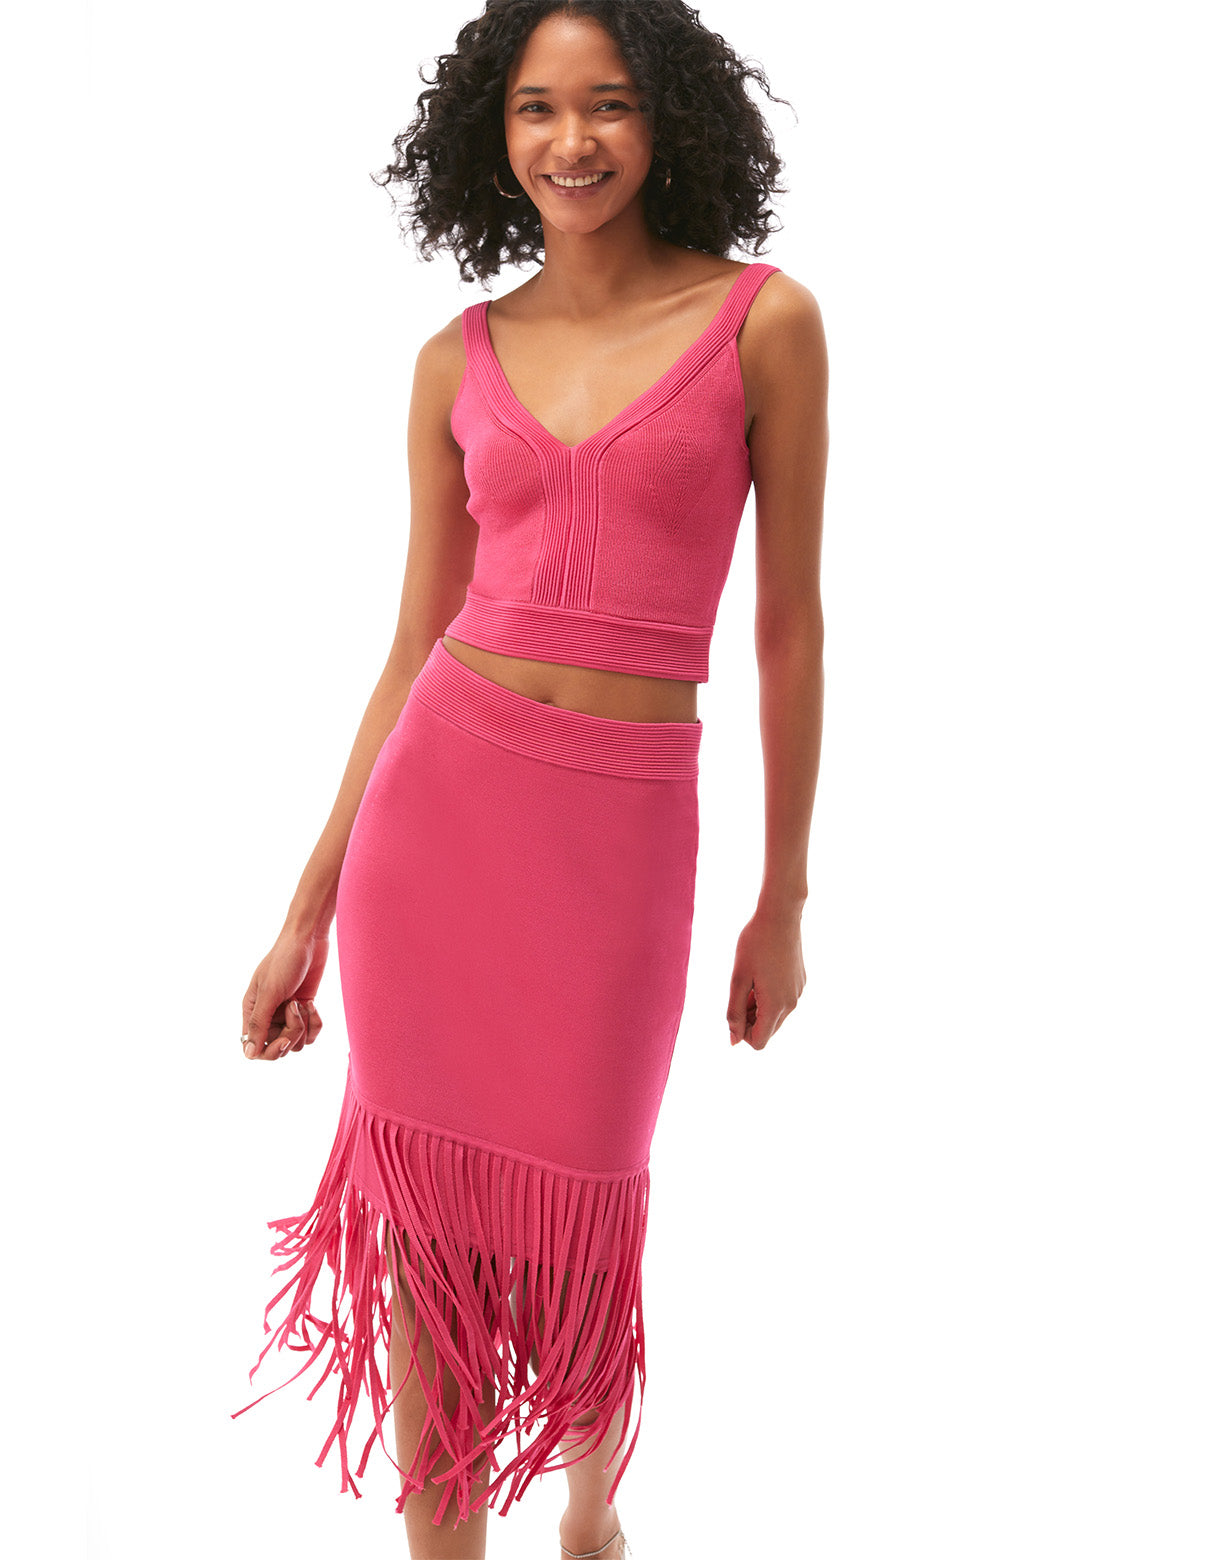 lorna fringe midi skirt hot pink - women's day to night party skirts designer fashion